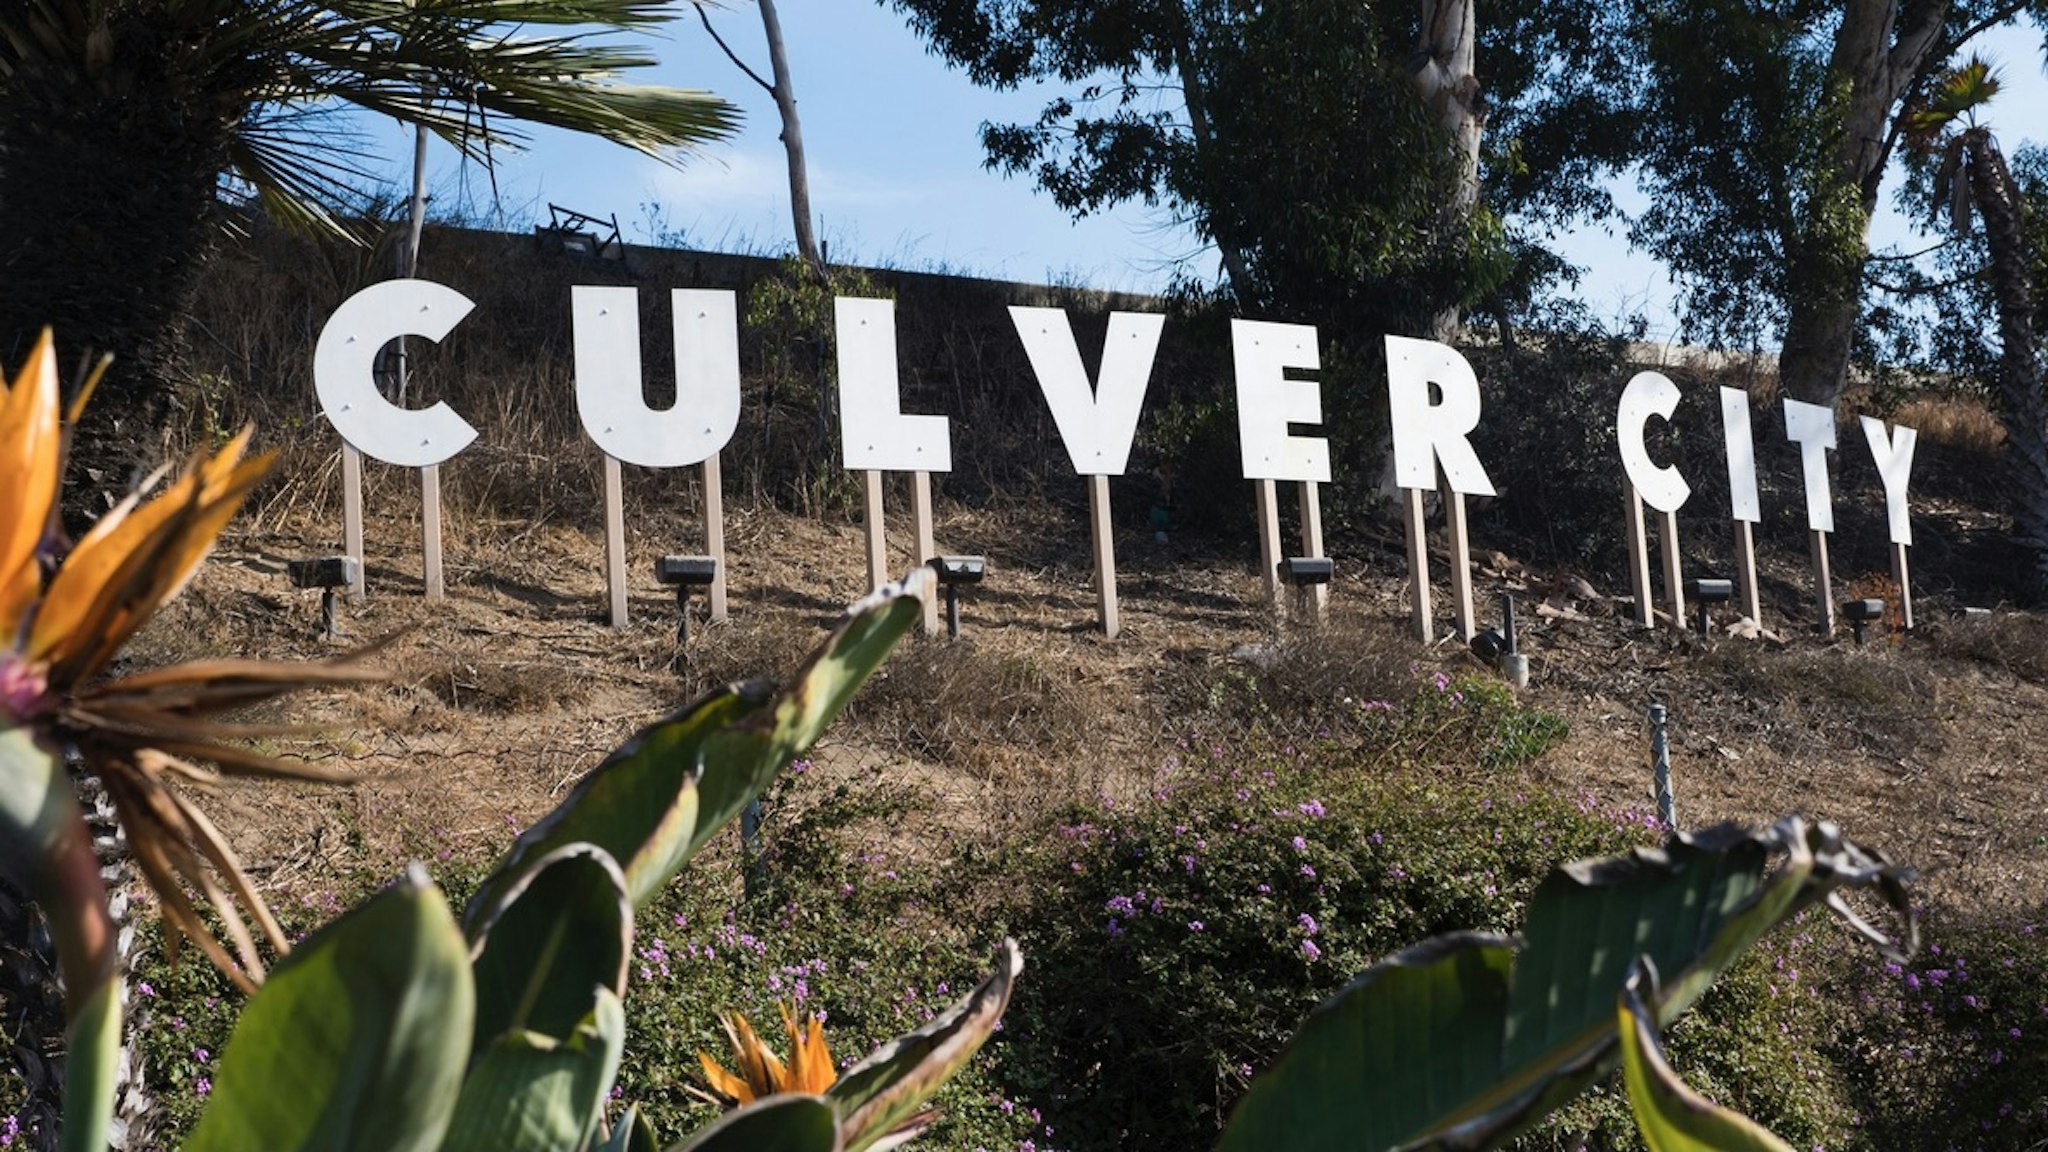 Culver City Sign Los Angeles - stock photo Culver City Sign Los Angeles albertc111 via Getty Images